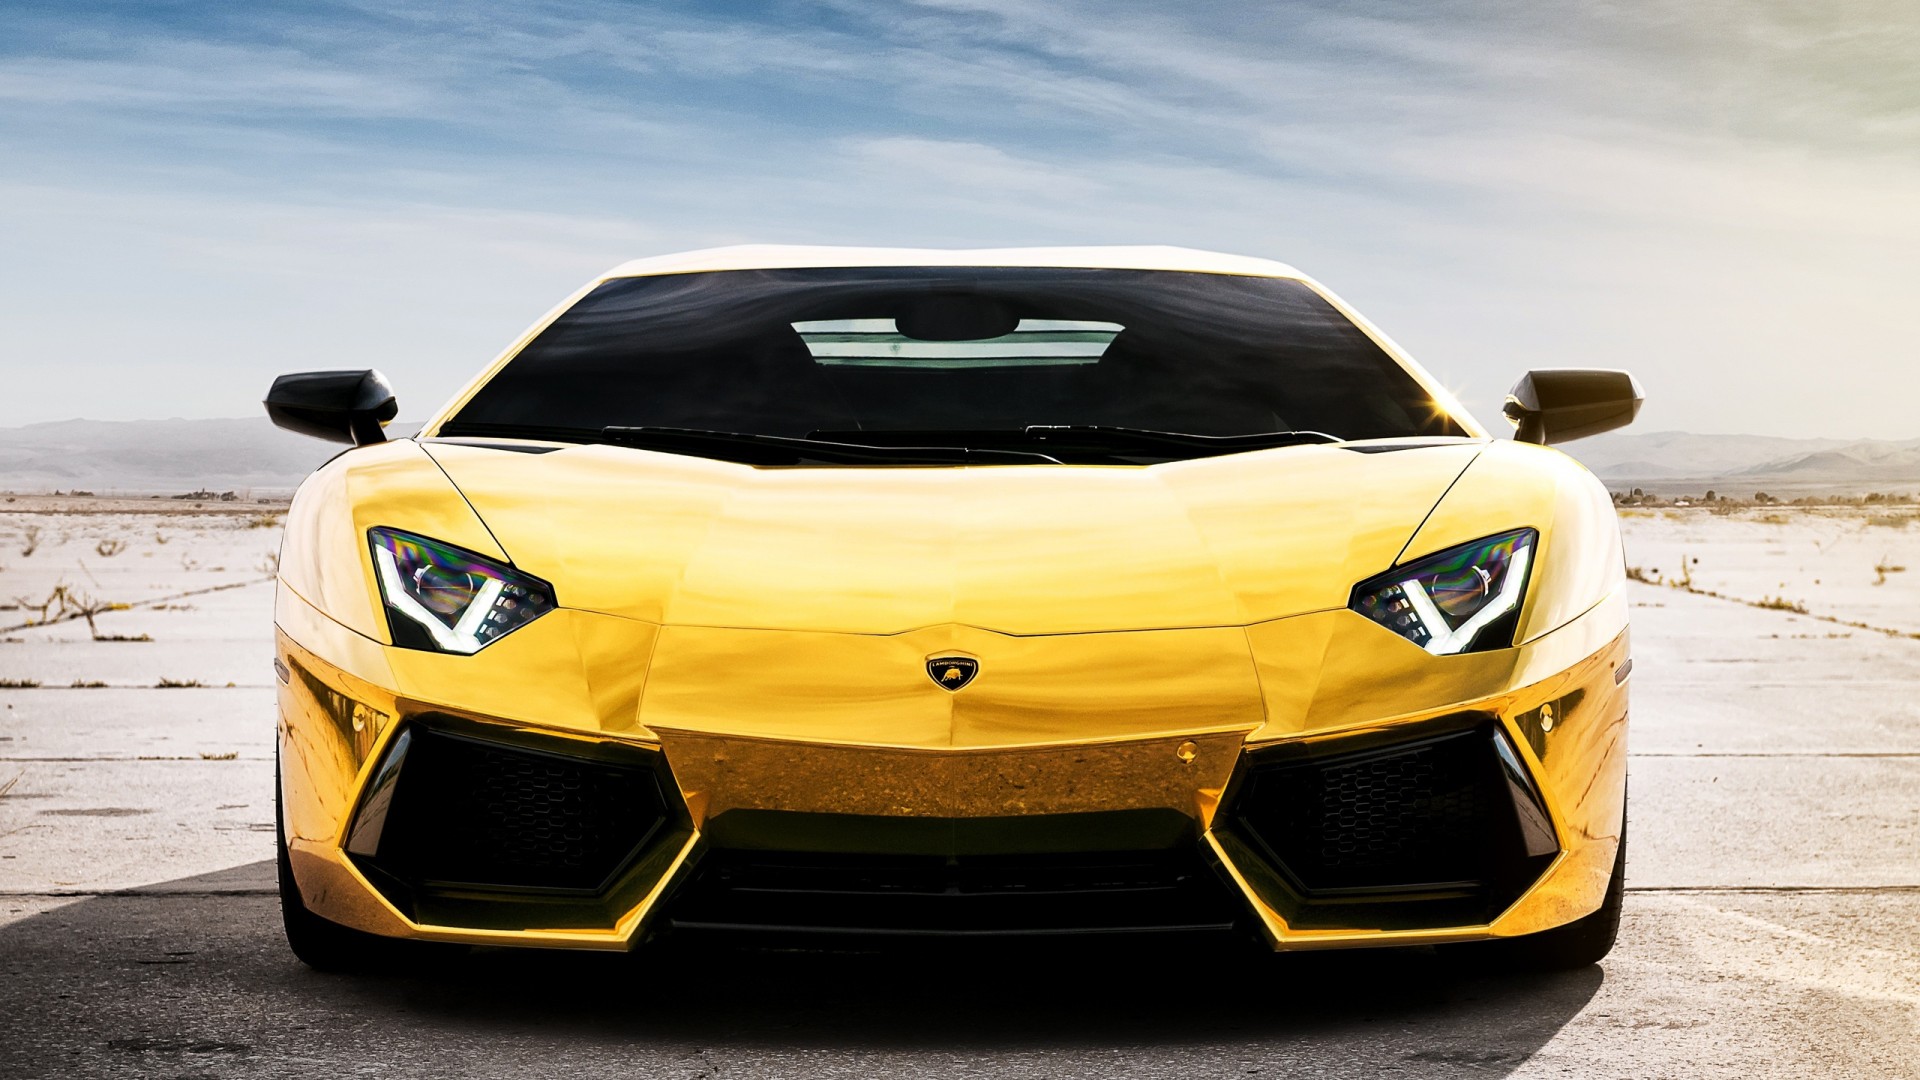 Lamborghini Aventador Wallpapers High Quality Download Free